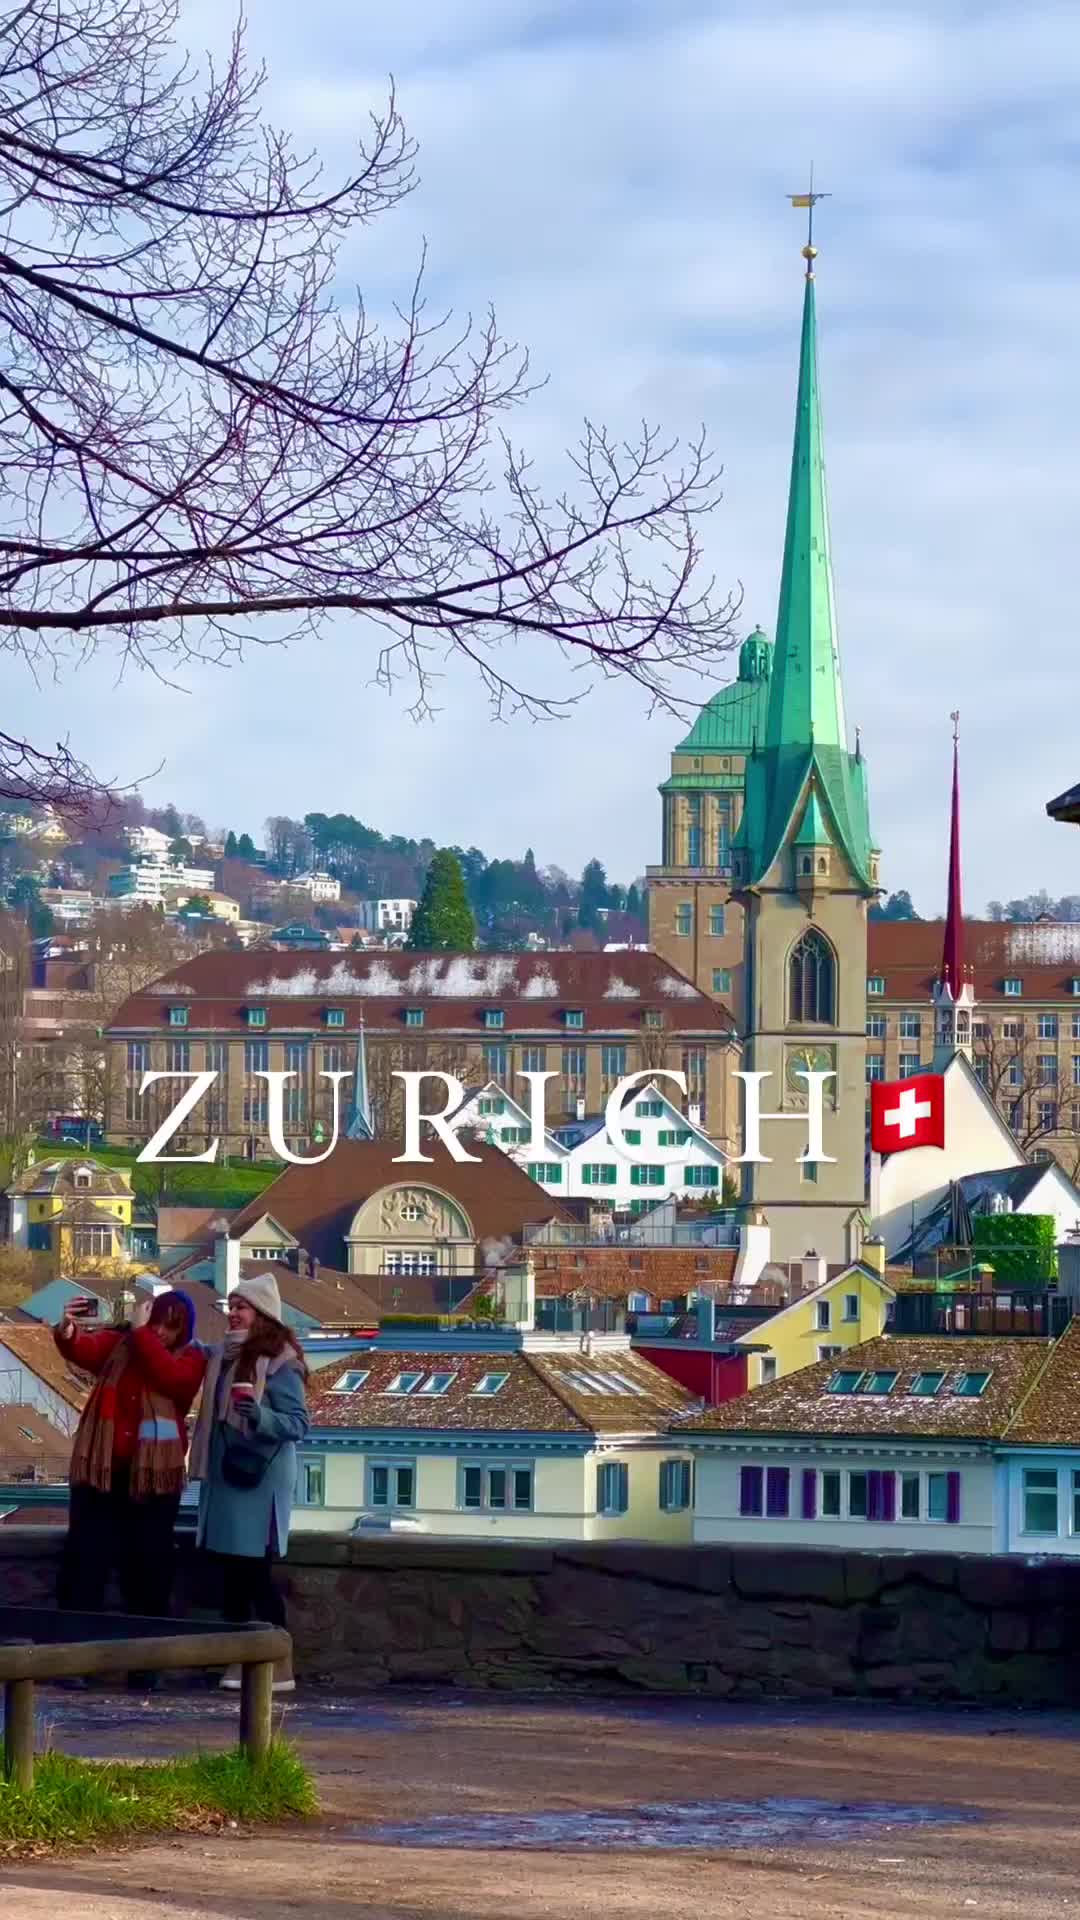 👇5 PHOTOGENIC ALLEYS & SPOT IN ZURICH OLD TOWN 🇨🇭

1. LINDENHOF HILL
2. PFALZGASSE
3. AUGUSTINERGASSE
4. SCHWANENGASSE
5. STORCHENGASSE

📌SAVE THIS FOR YOUR TRIP TO SWITZERLAND🇨🇭

🇨🇭For more 100+ Swiss destinations & inspirations 
👉@syifa_in_switzerland

#zurich🇨🇭 #zurich #zuricholdtown #zürichcity #zuerich#zürich #zürich_switzerland #zurich_switzerland #züri #tsüri #zh #zürichcity #visitswitzerland #visitswiss #visitzürich #visitzurich #zurichinfluencer #augustinergasse #lindenhofhill #lindenhof #swiss #switzerland #hellozurich #zhwelt #zurichinfluencer #zurichblogger #swisstrip  #syifainswitzerland